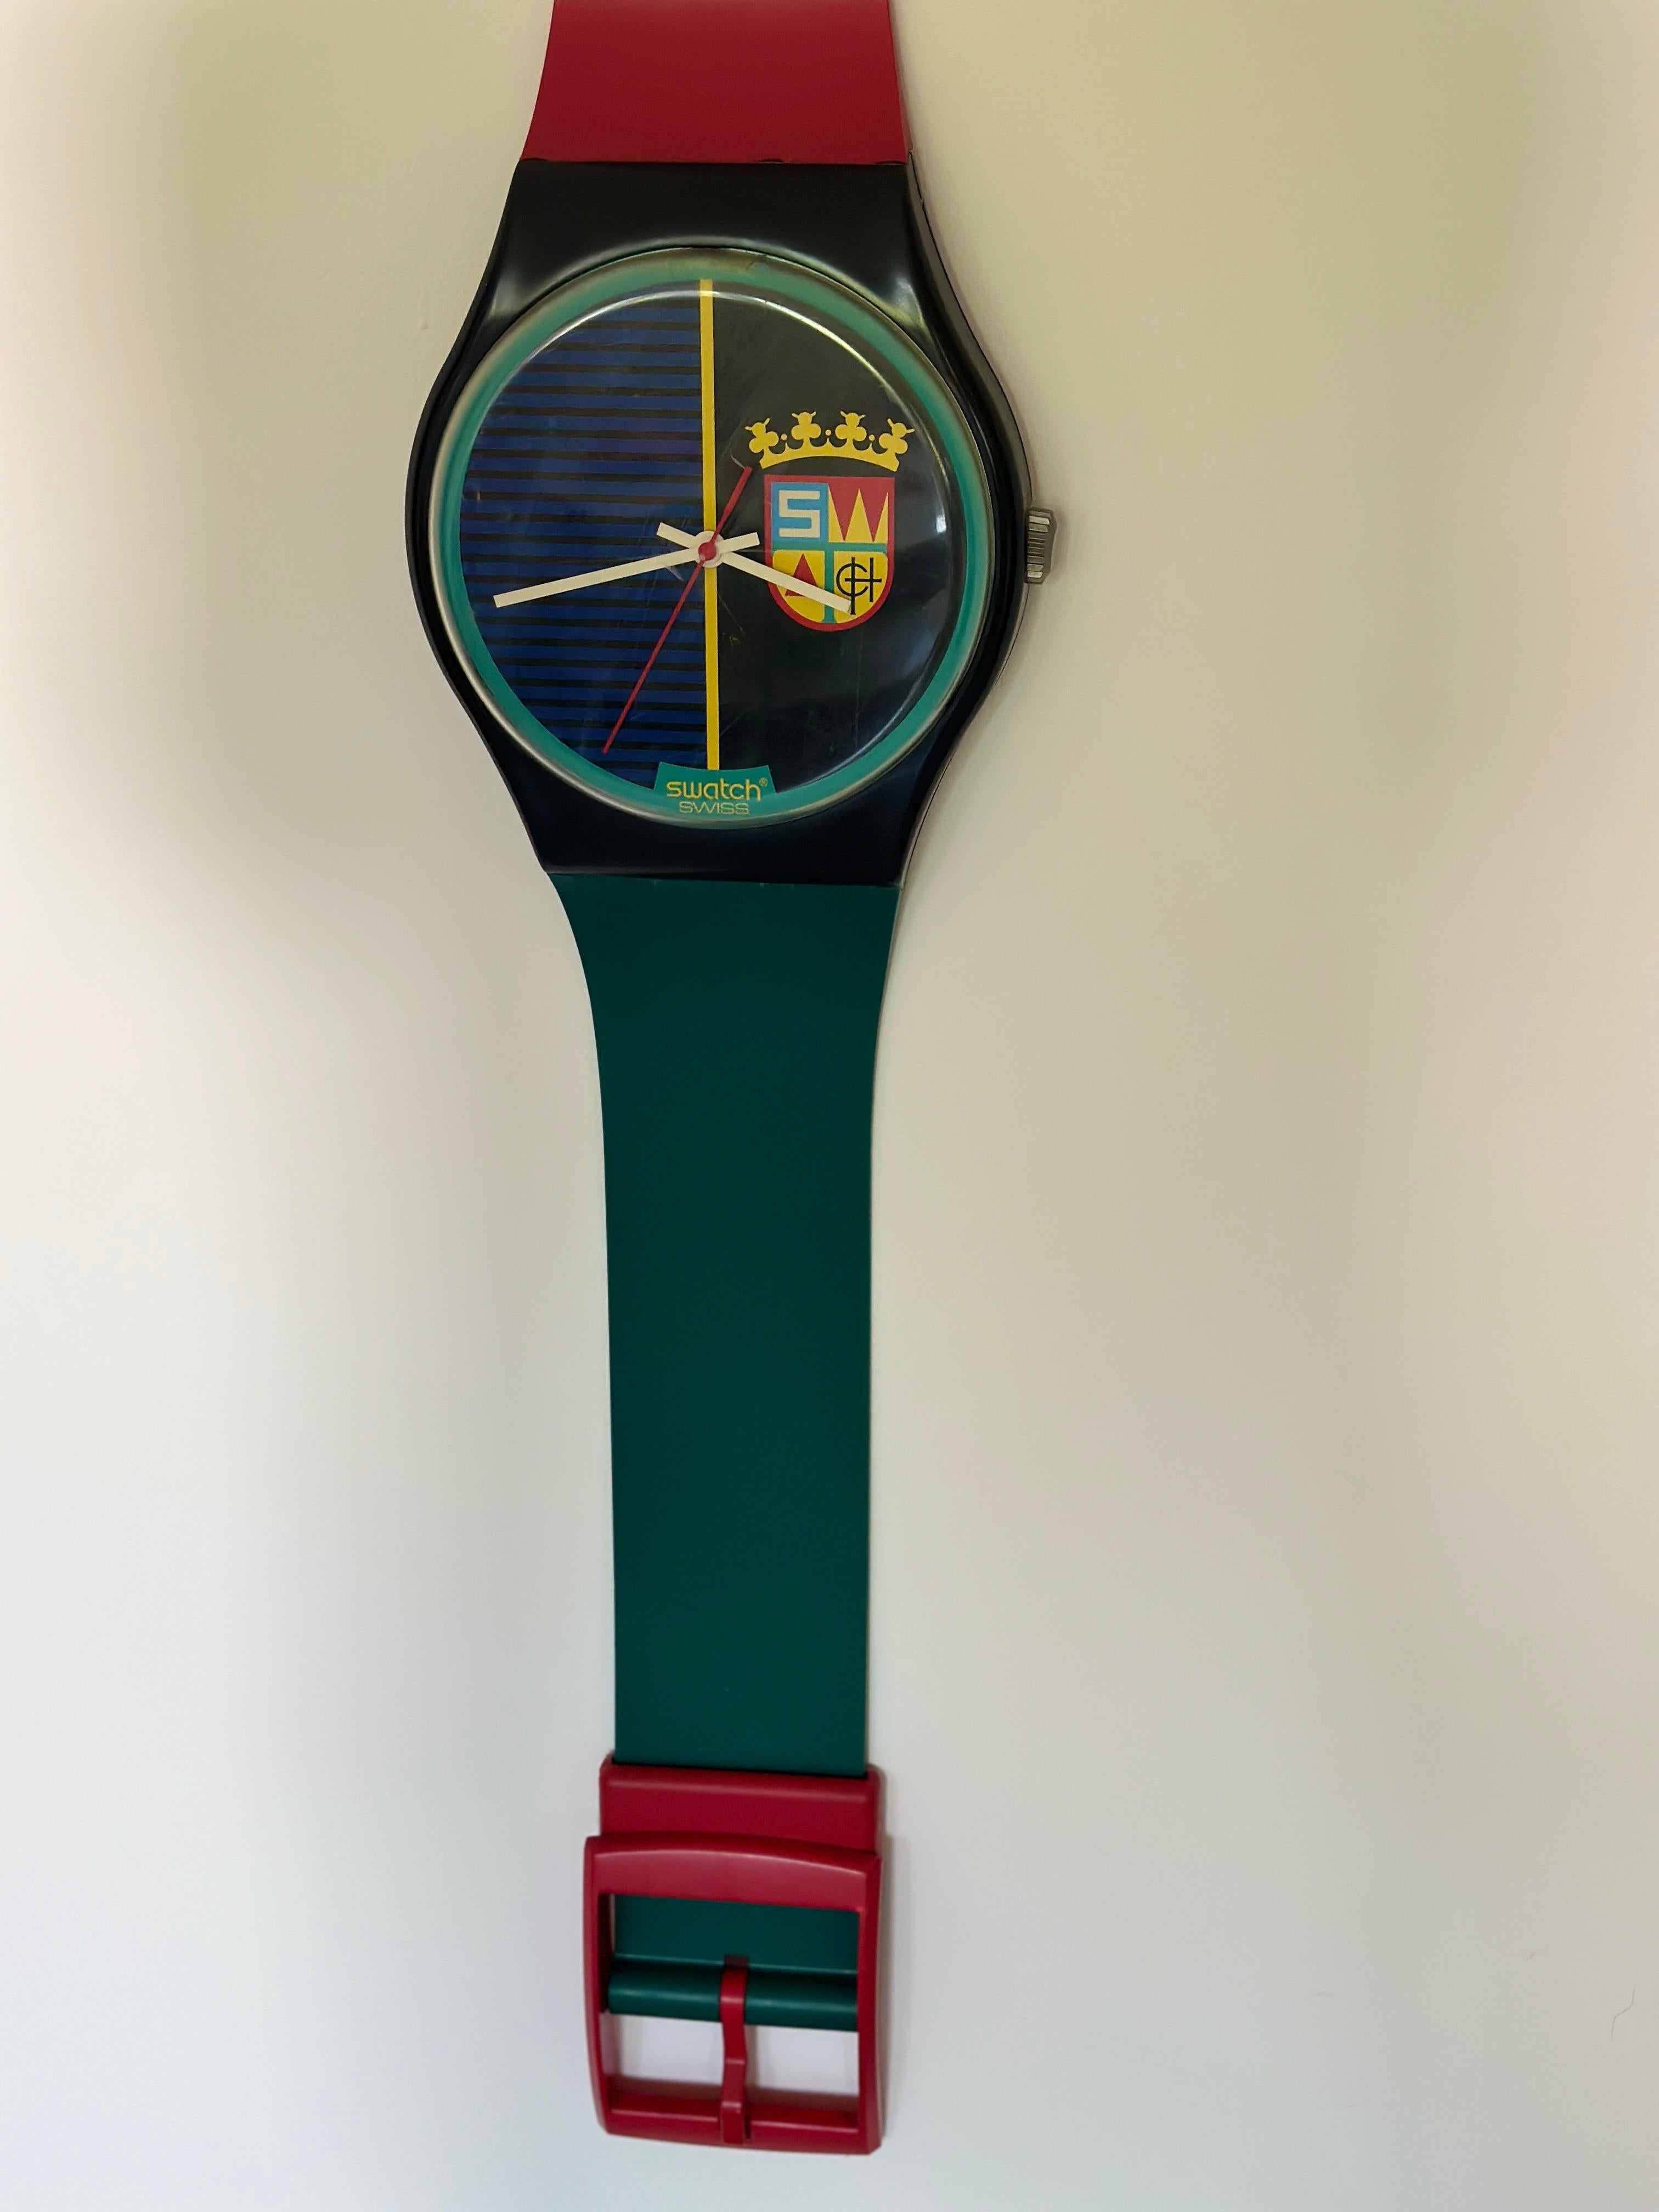 giant swatch watch wall clock